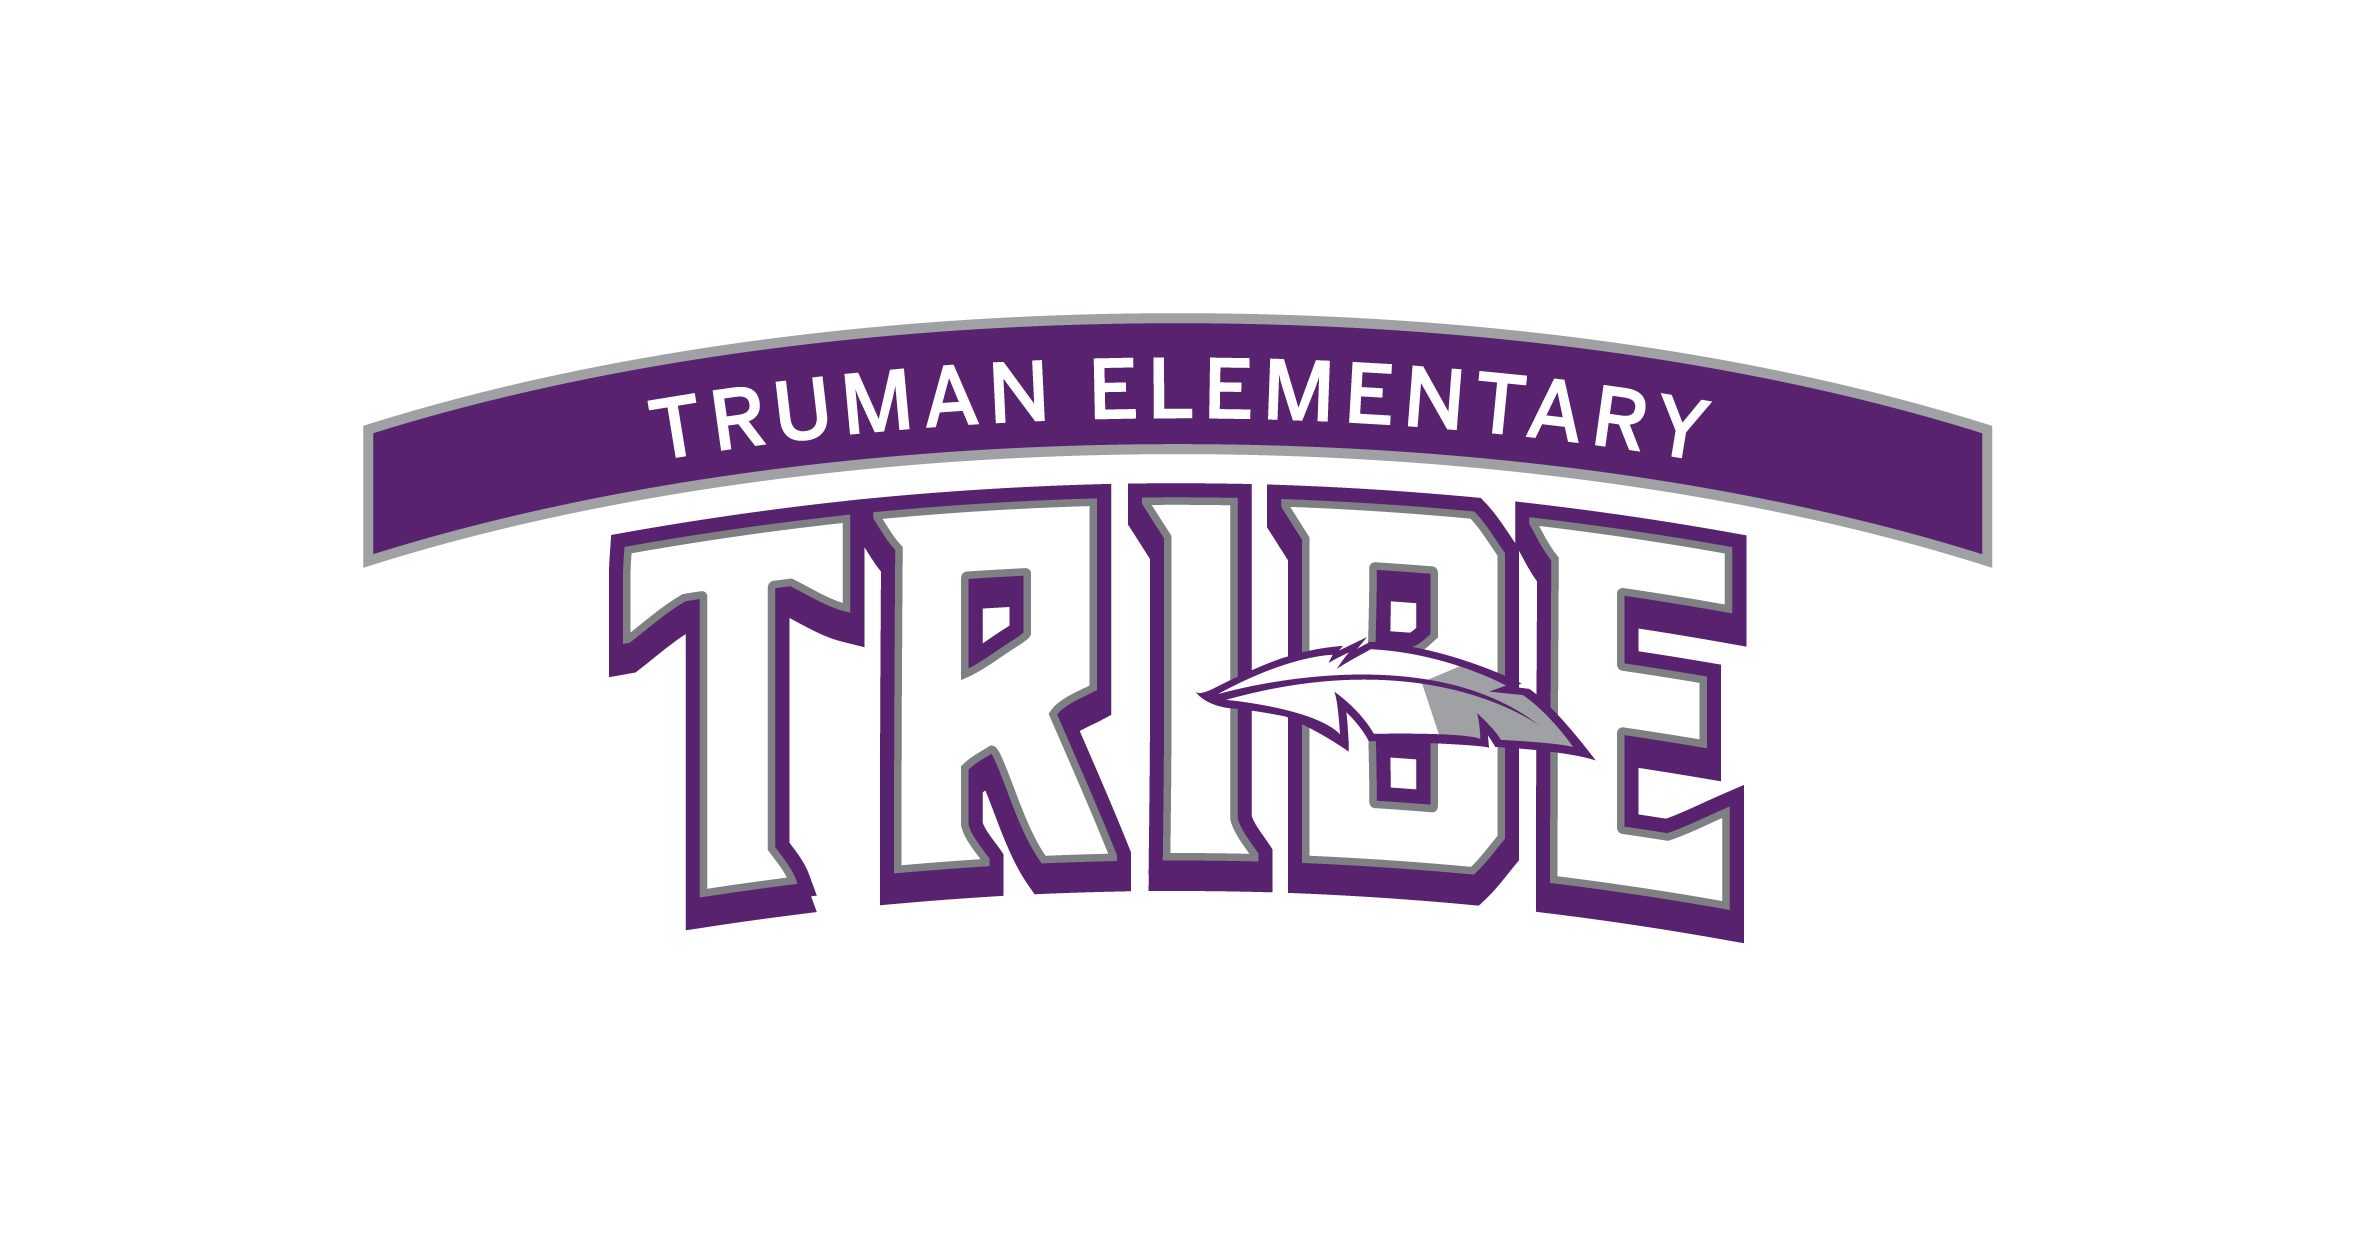 Truman Elementary Tribe